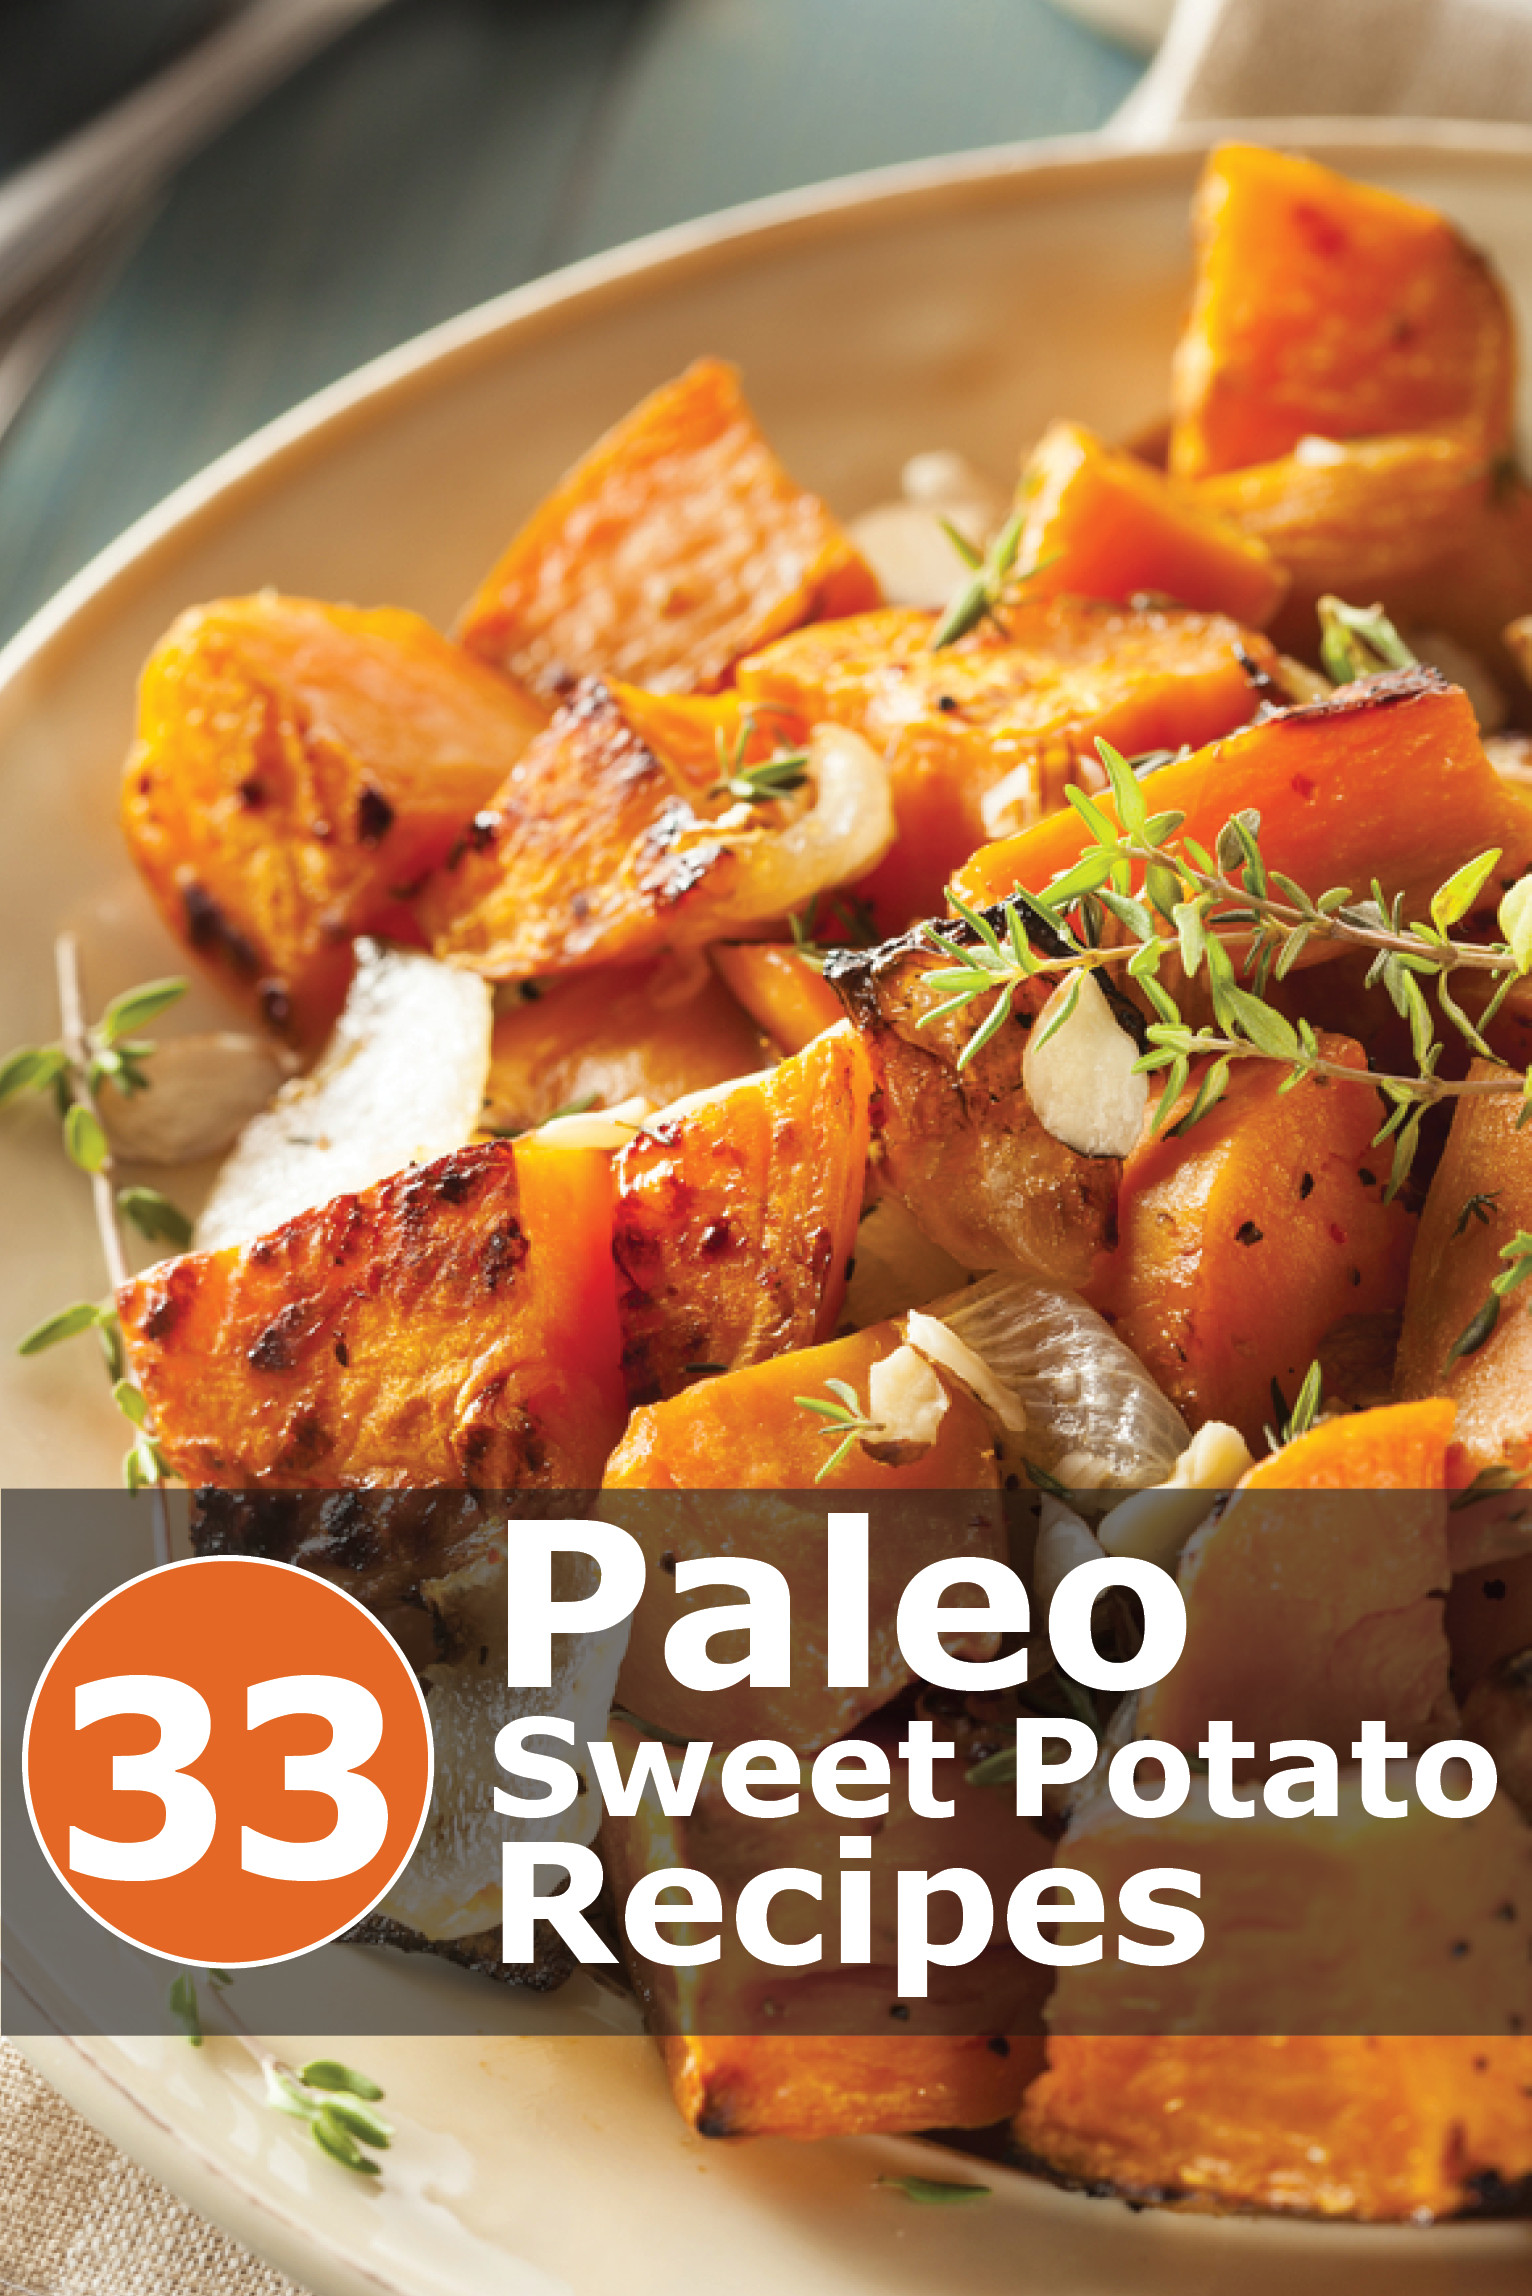 White Sweet Potato Recipes Healthy
 33 Paleo Nourishing Sweet Potato Recipes anyone can make